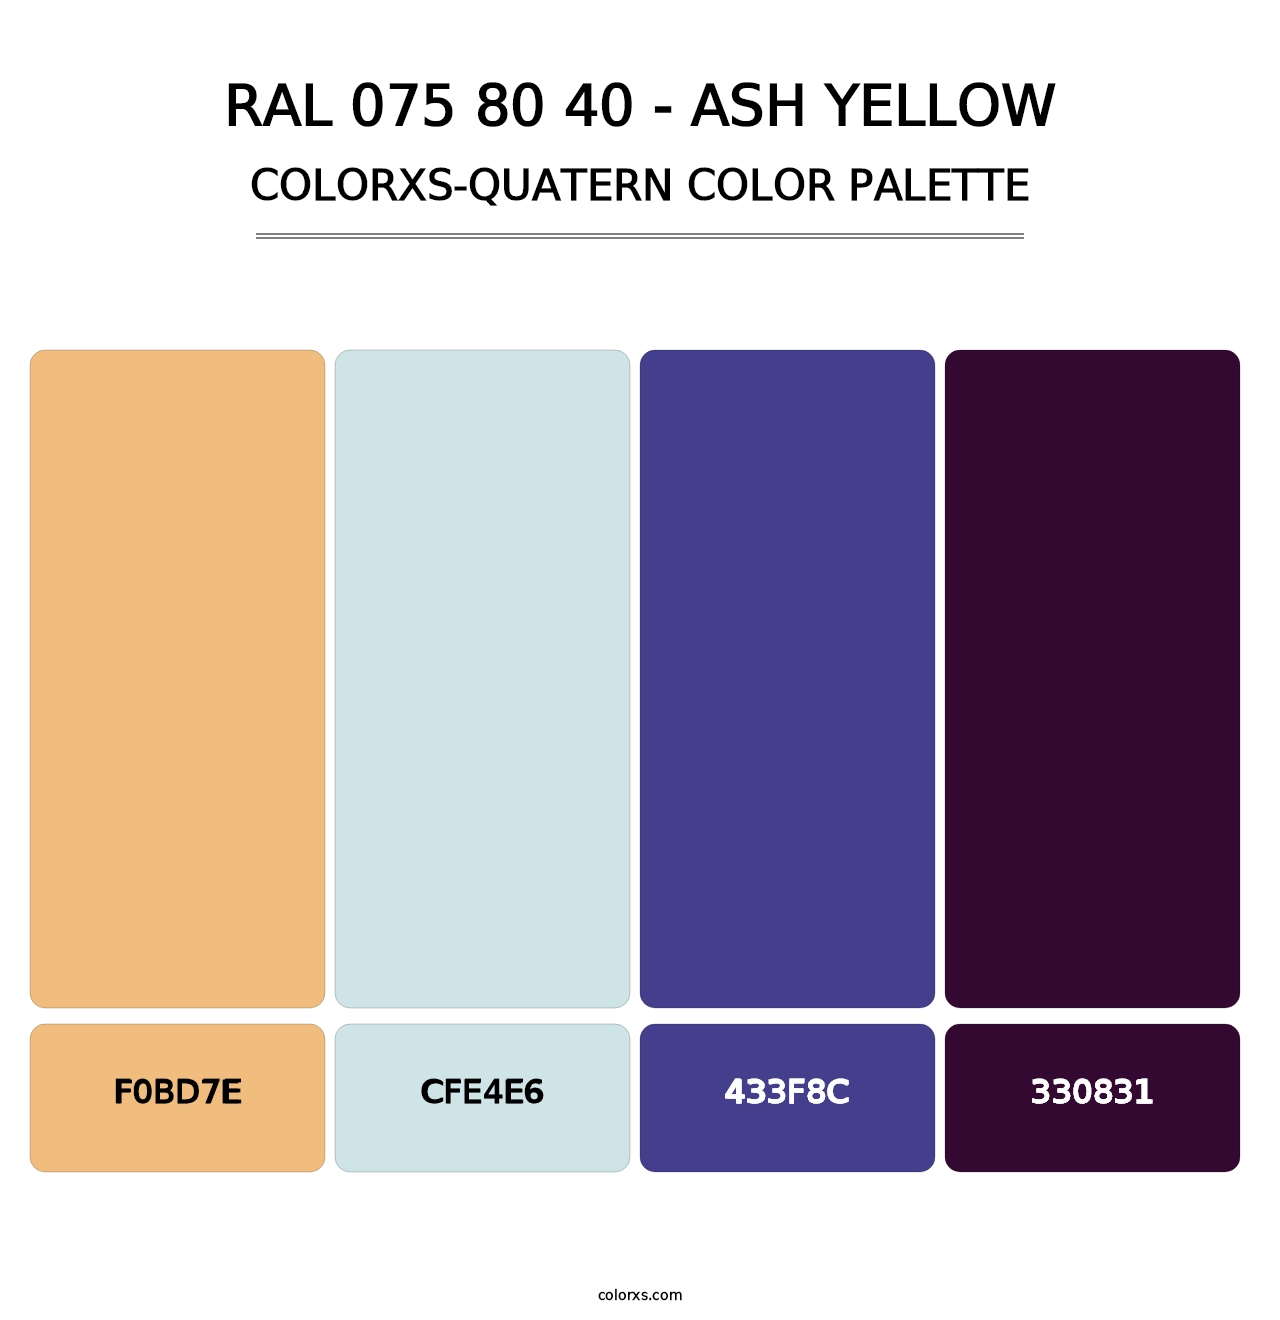 RAL 075 80 40 - Ash Yellow - Colorxs Quatern Palette